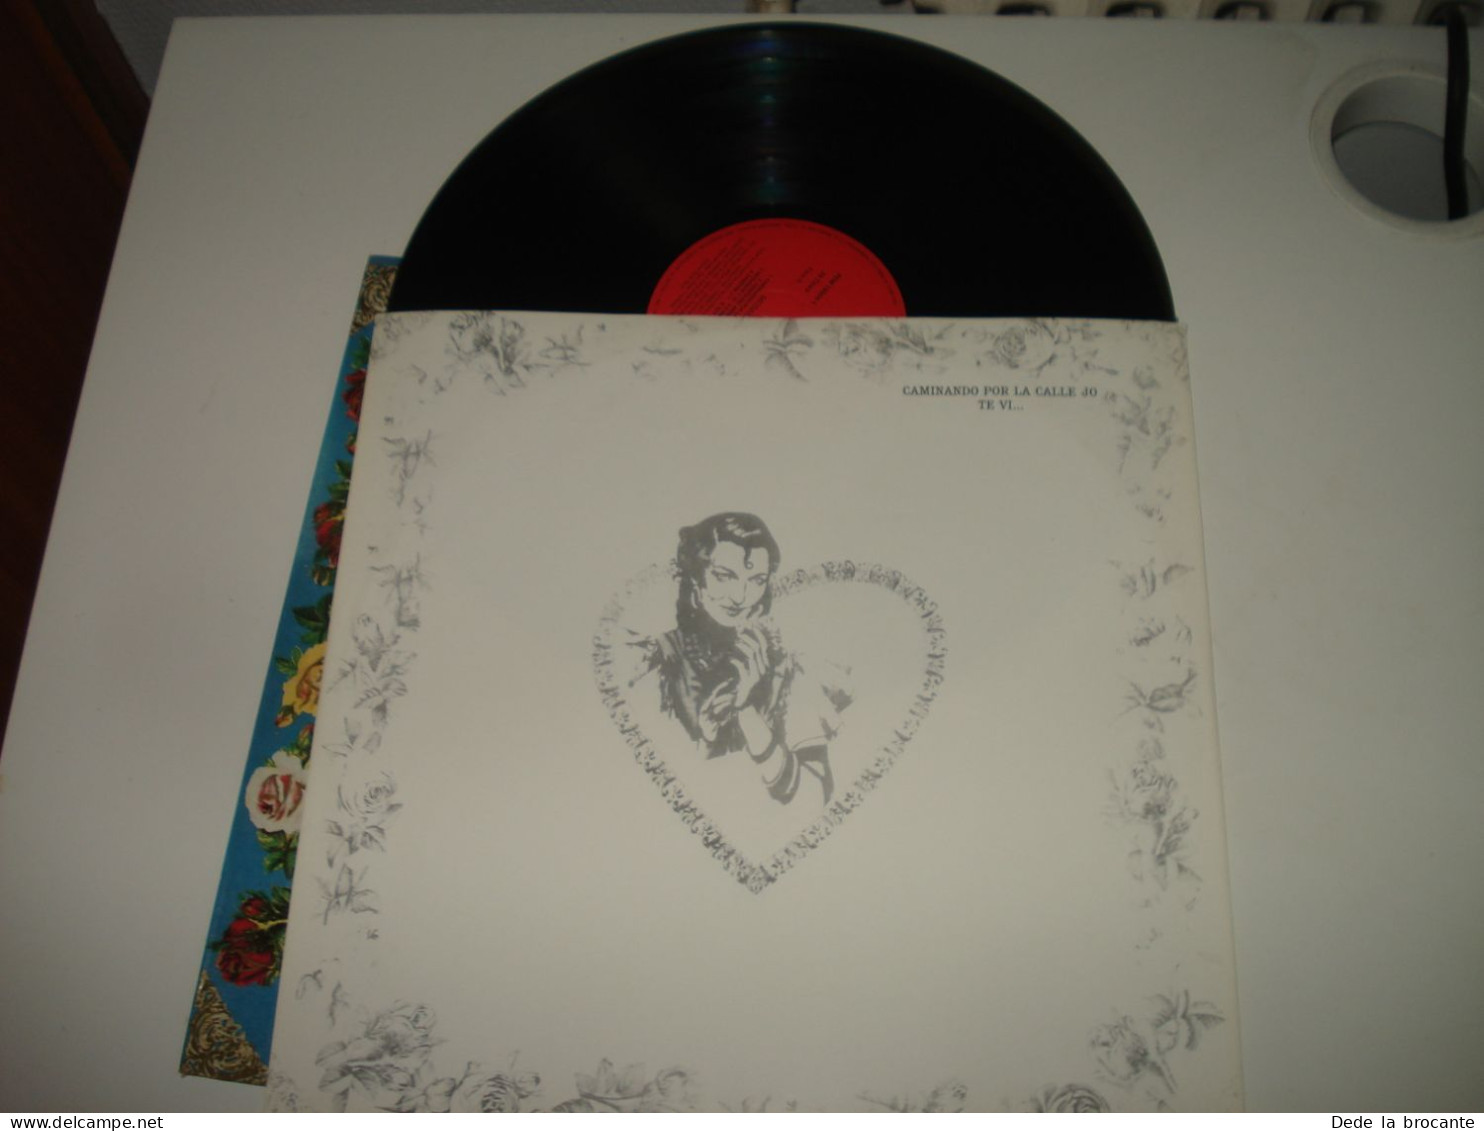 B9 / Gipsy Kings – Mosaïque - LP - Vanessa – 15 504-1 - France  1989  EX/N.M - Country Y Folk